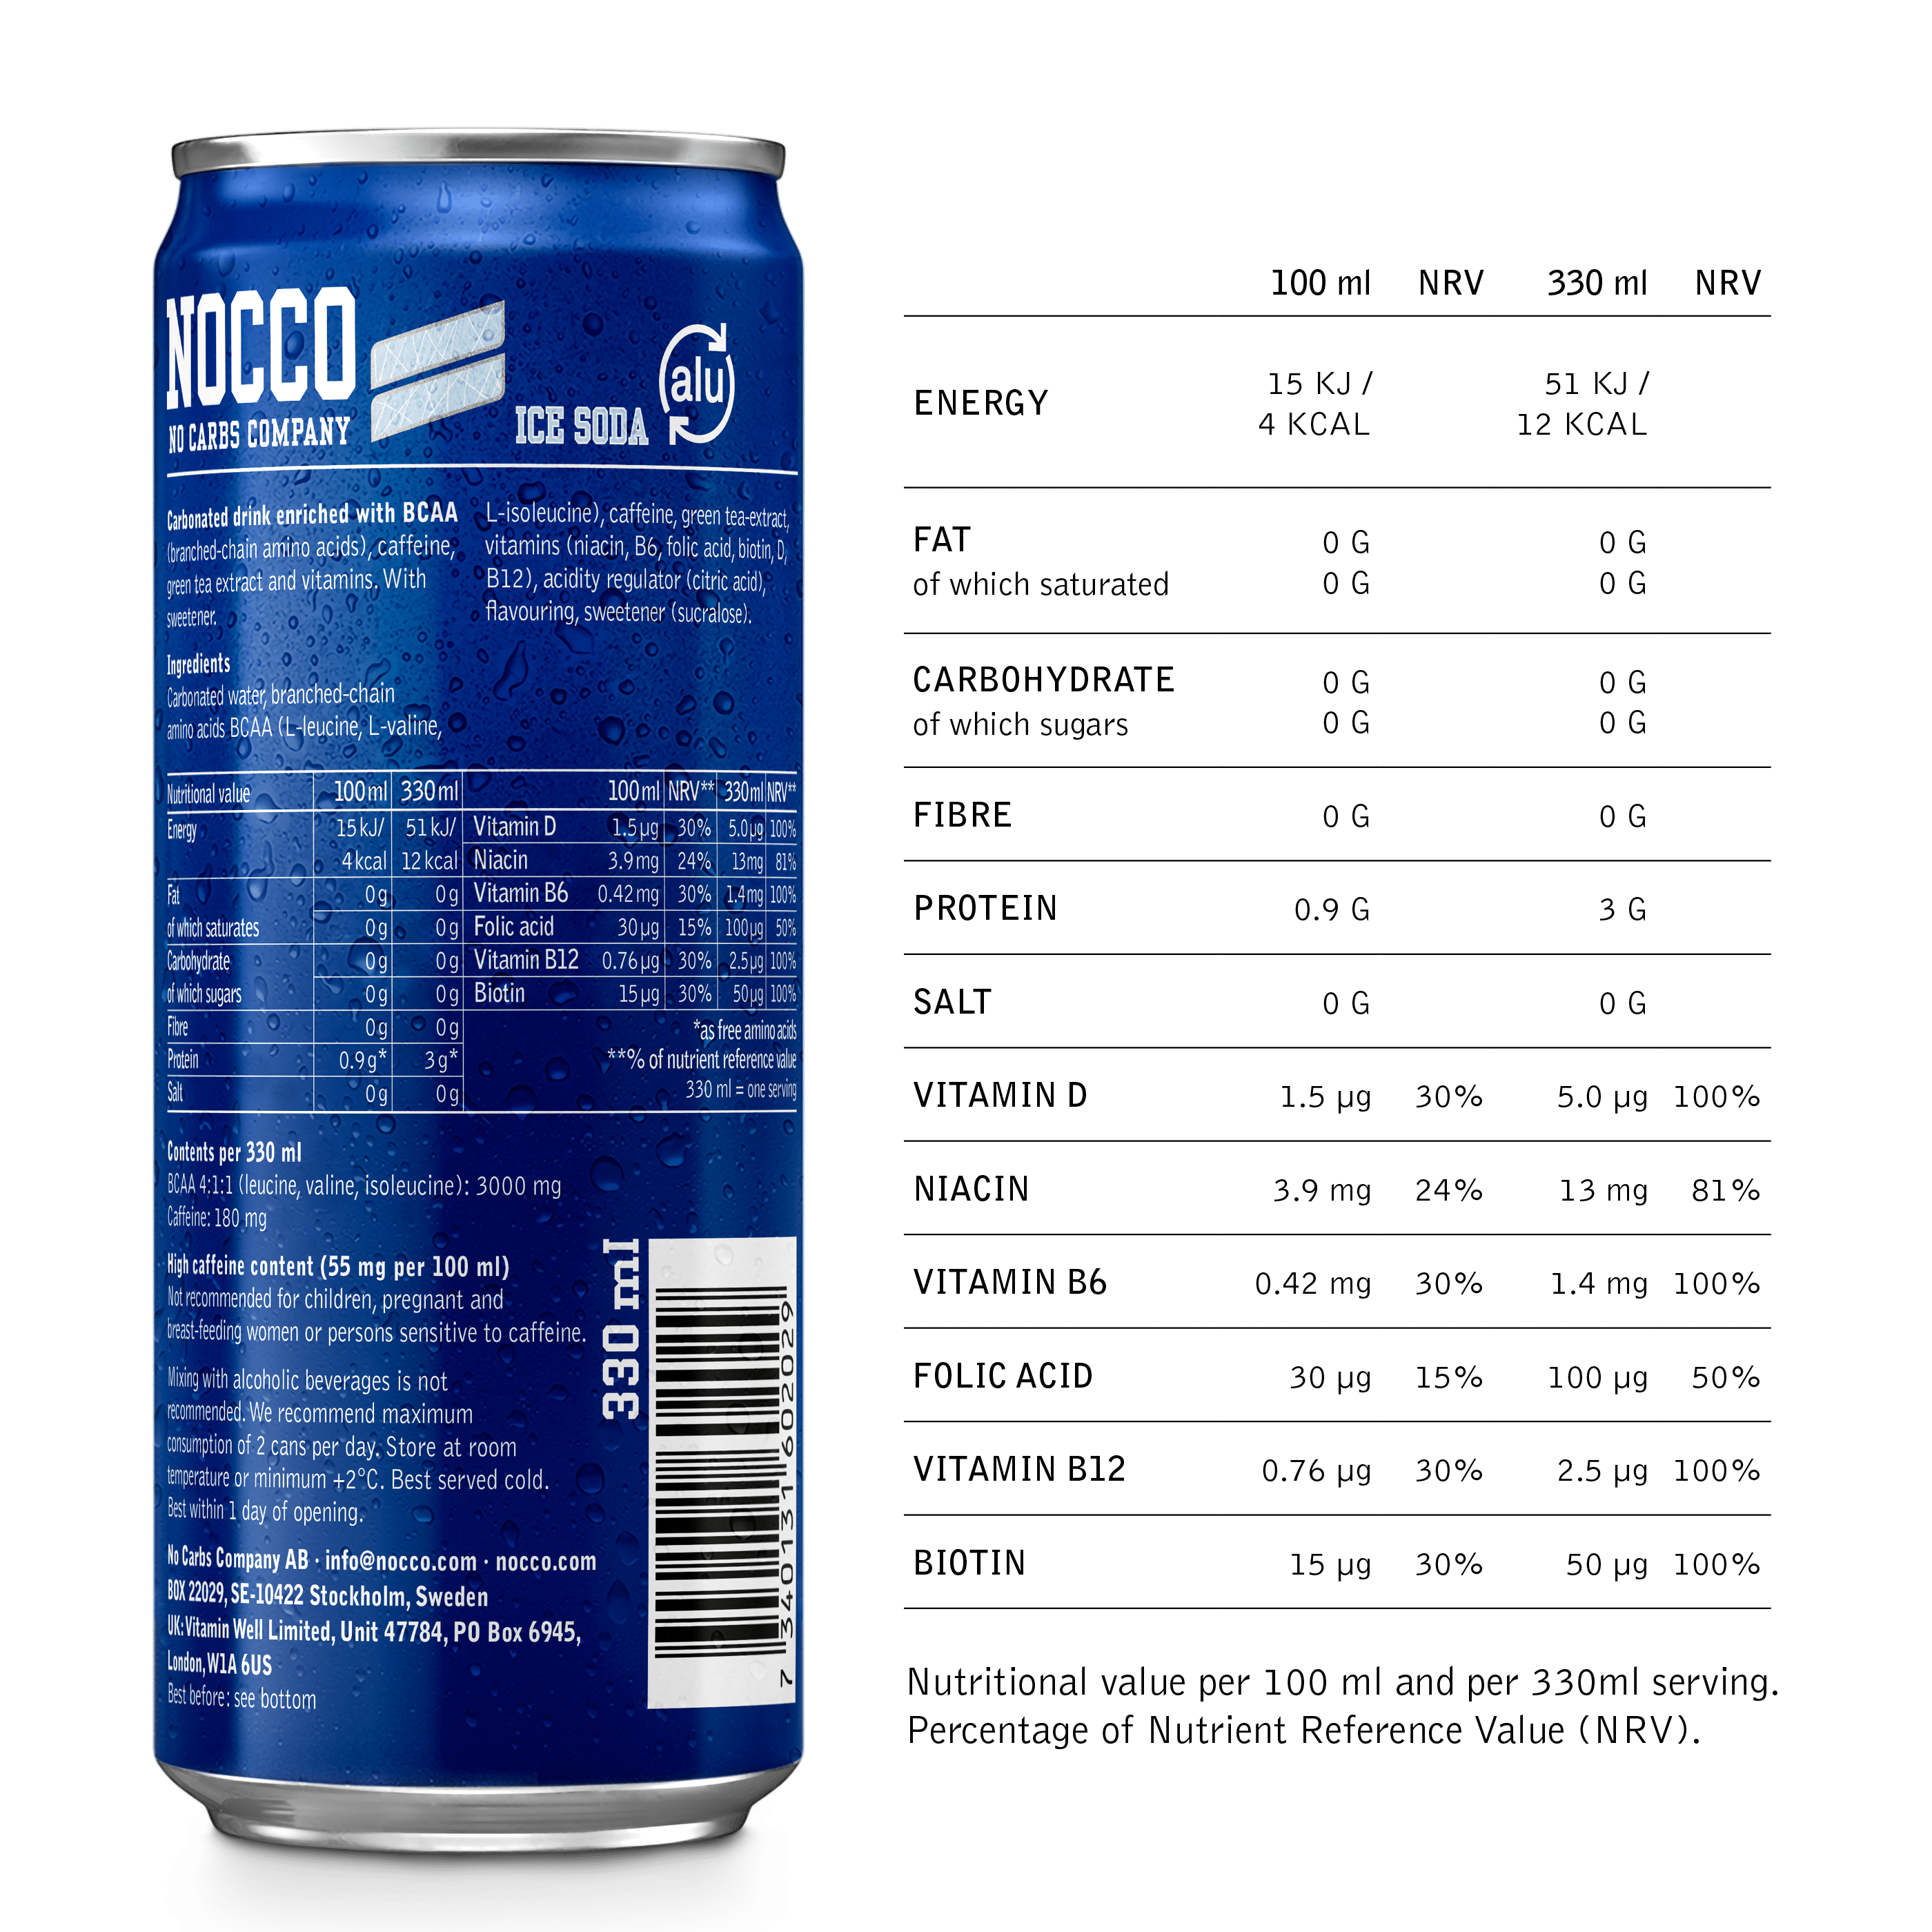 Nocco Ice soda nutritional information